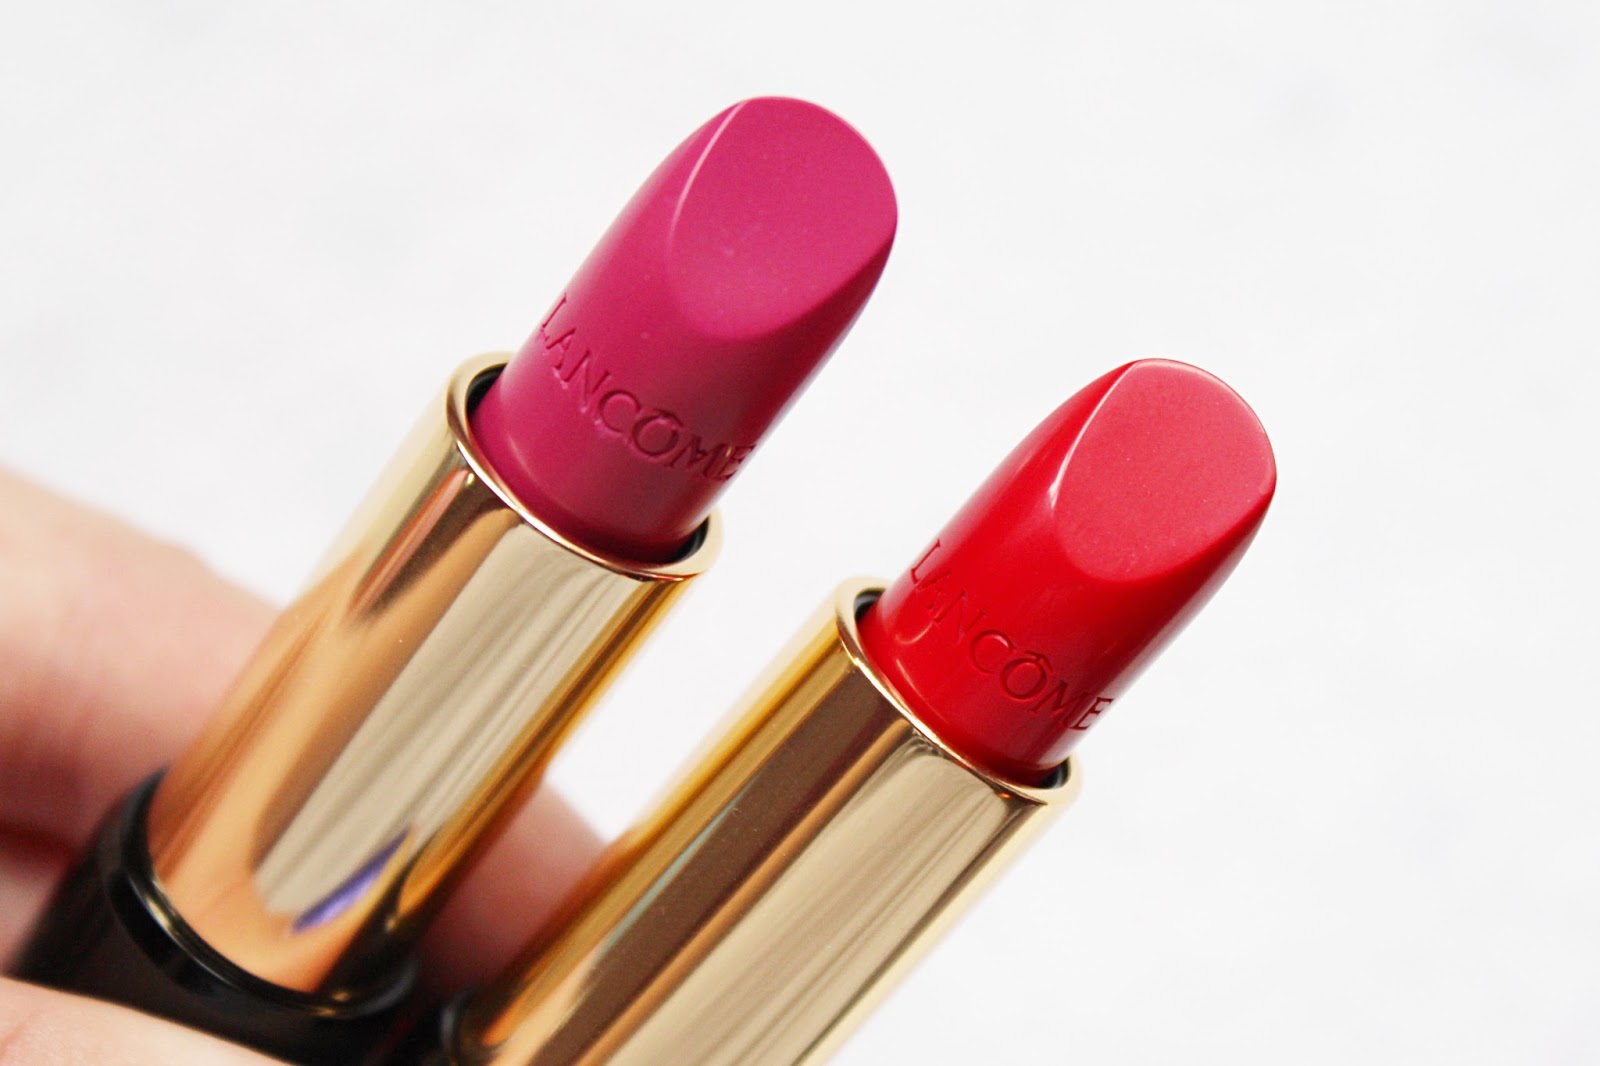 Lancome L'Absolu Rouge Lipsticks 